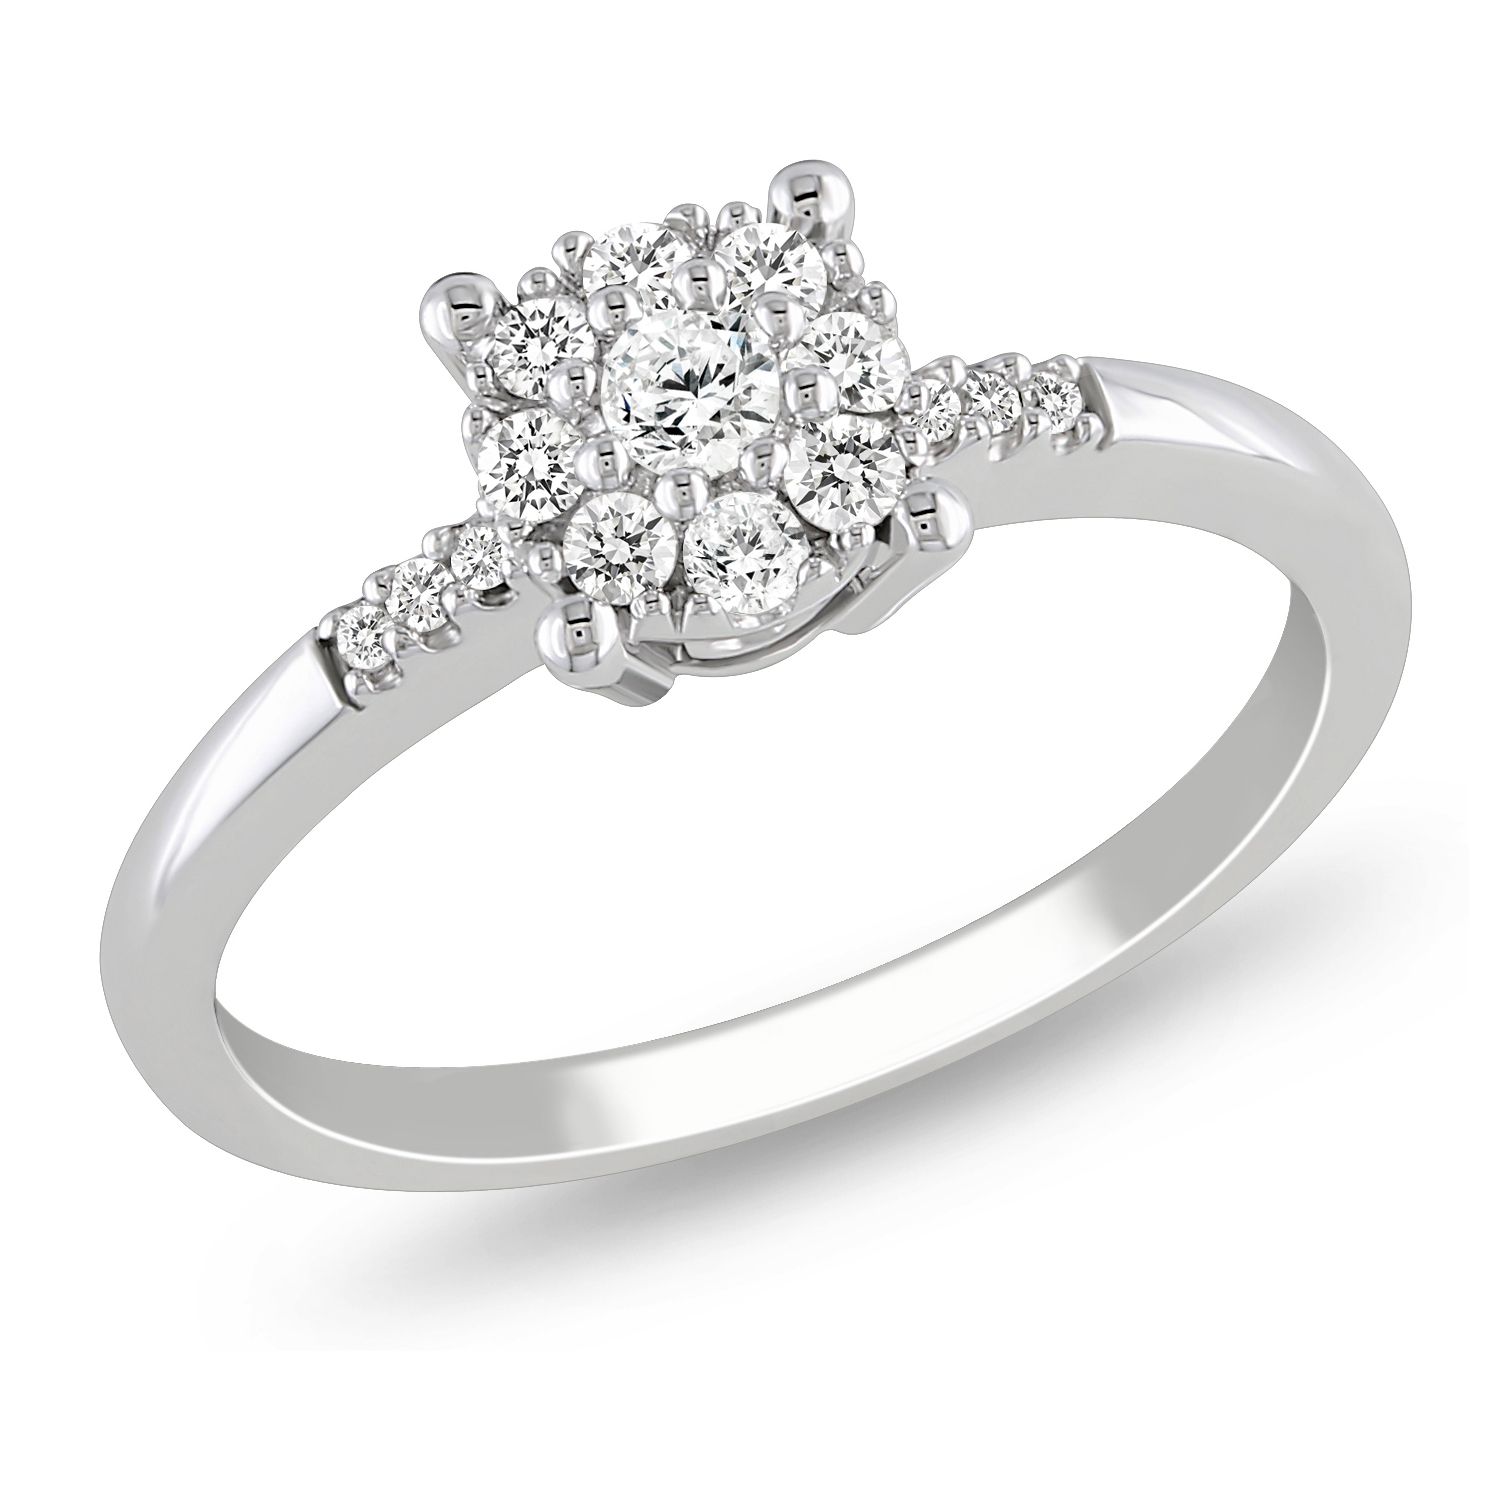 1/4 CTTW Diamond Fashion Ring Set in 10K White Gold (GH I2;I3)